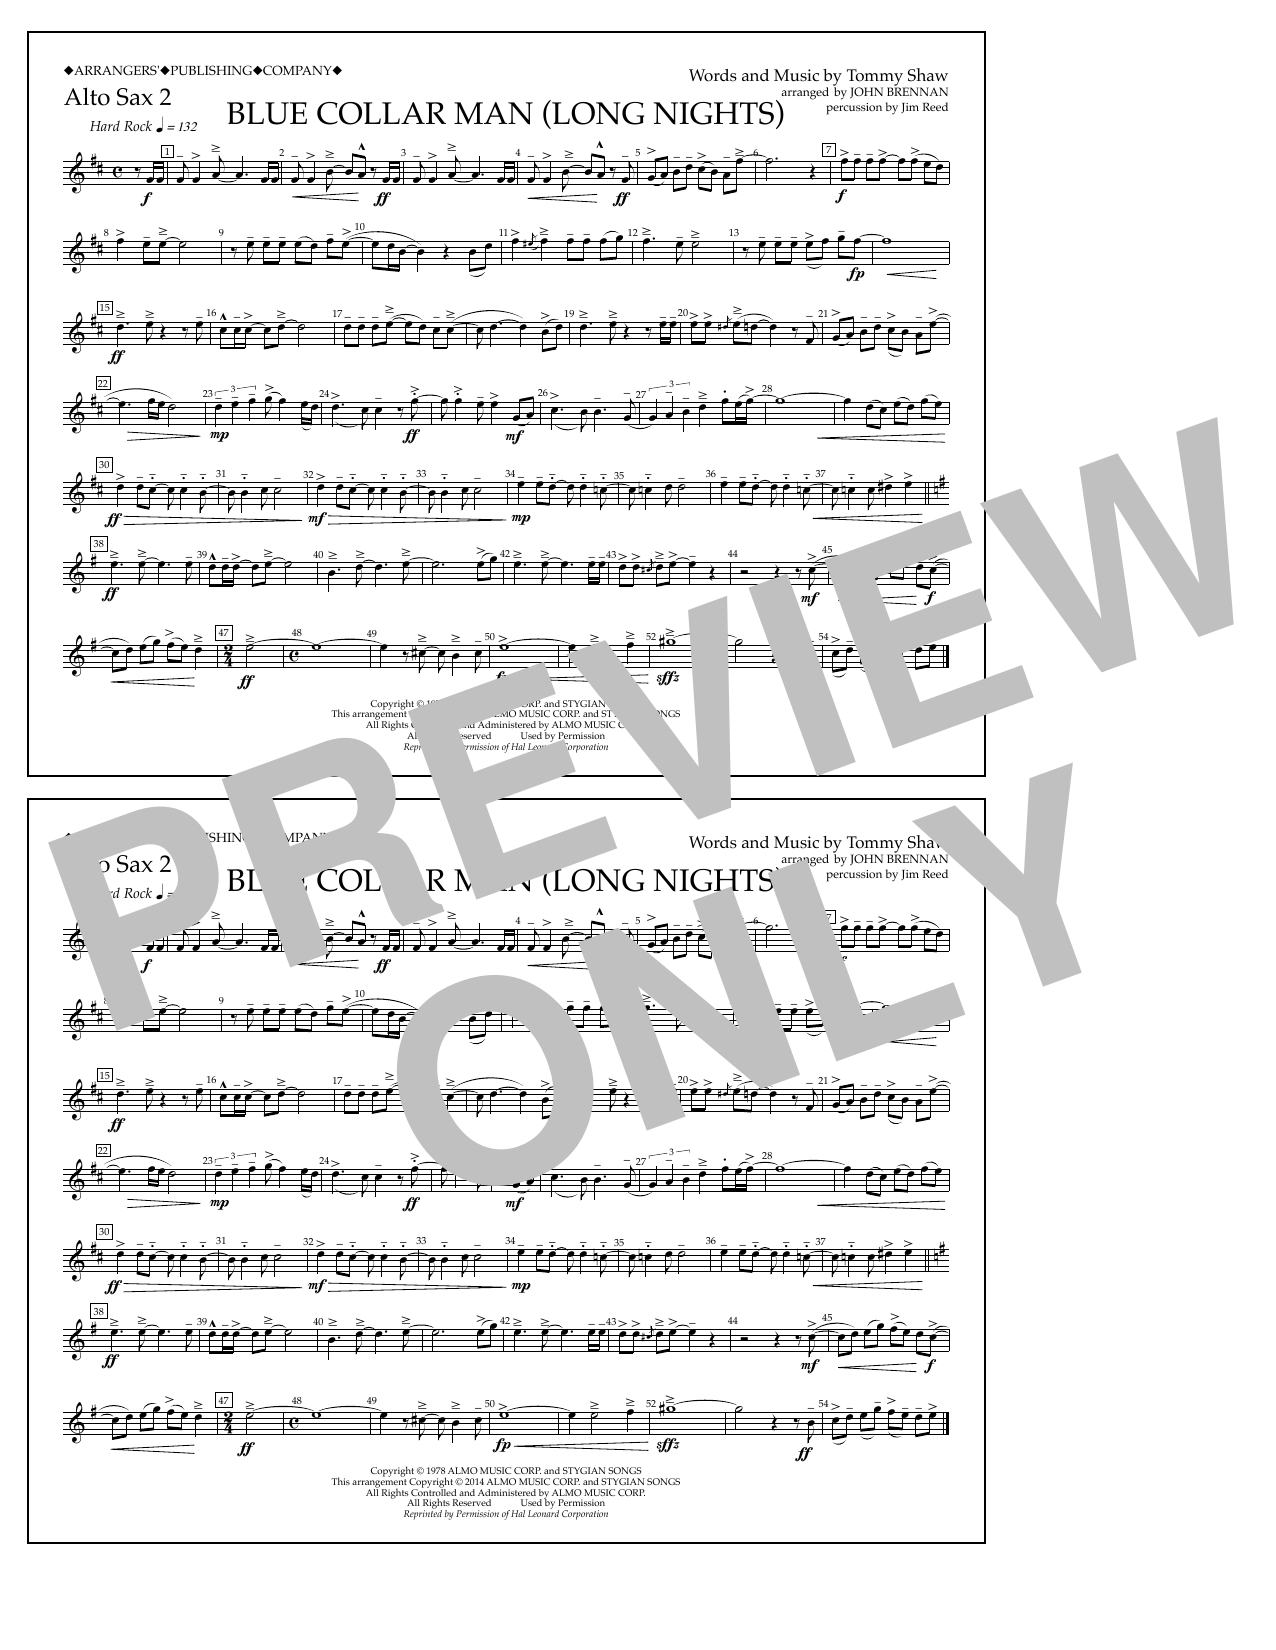 John Brennan Blue Collar Man (Long Nights) - Alto Sax 2 Sheet Music Notes & Chords for Marching Band - Download or Print PDF